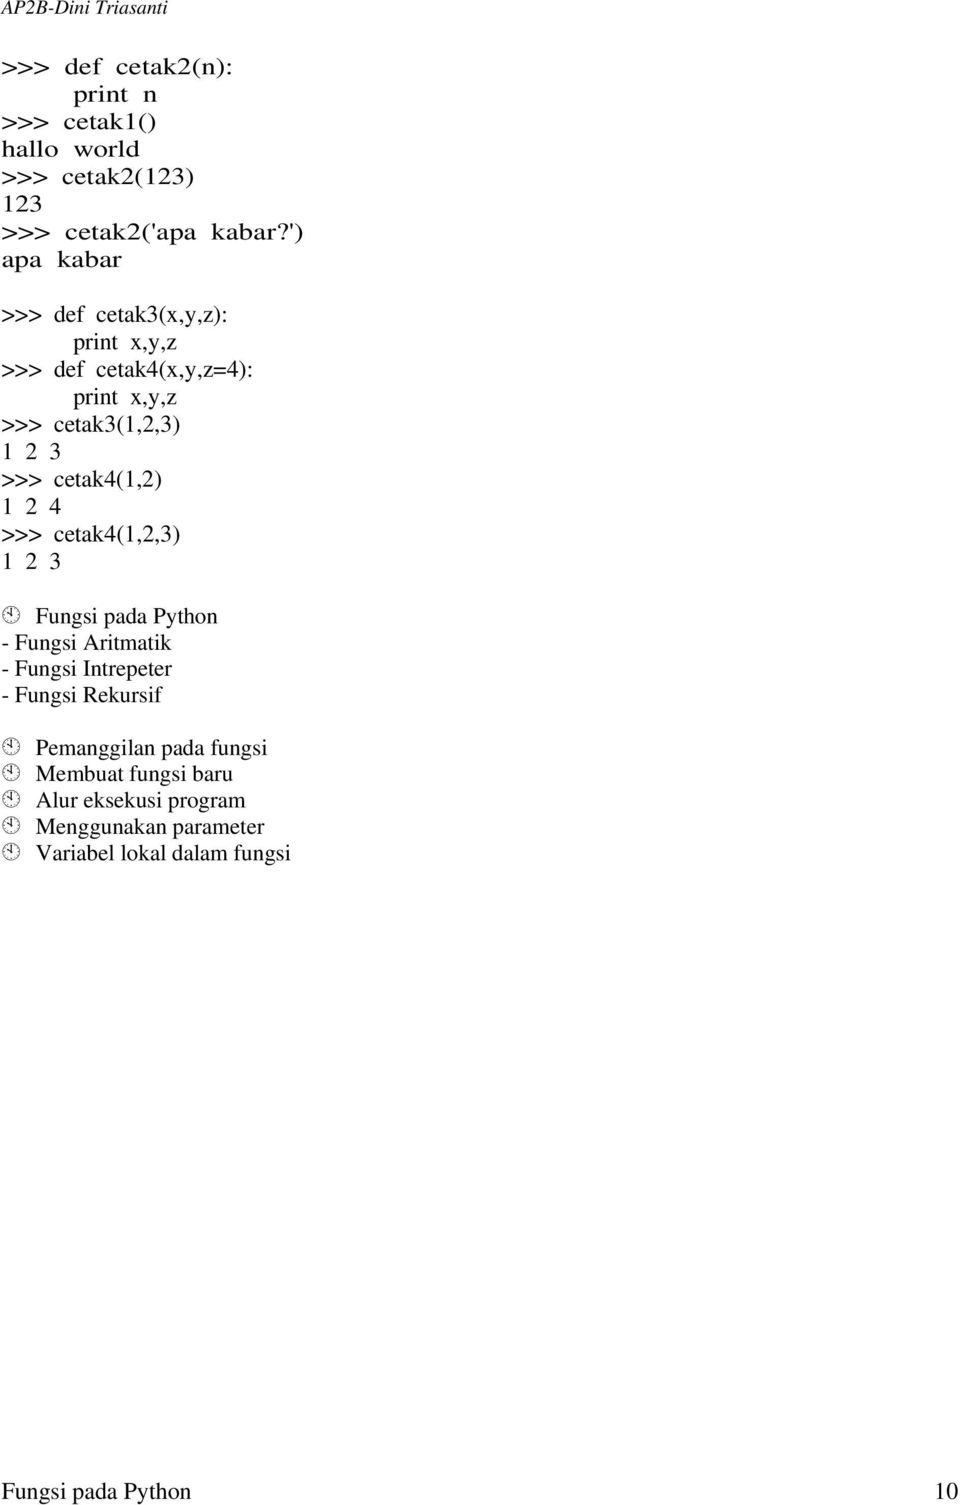 cetak4(1,2) 1 2 4 >>> cetak4(1,2,3) 1 2 3 Fungsi pada Python - Fungsi Aritmatik - Fungsi Intrepeter - Fungsi